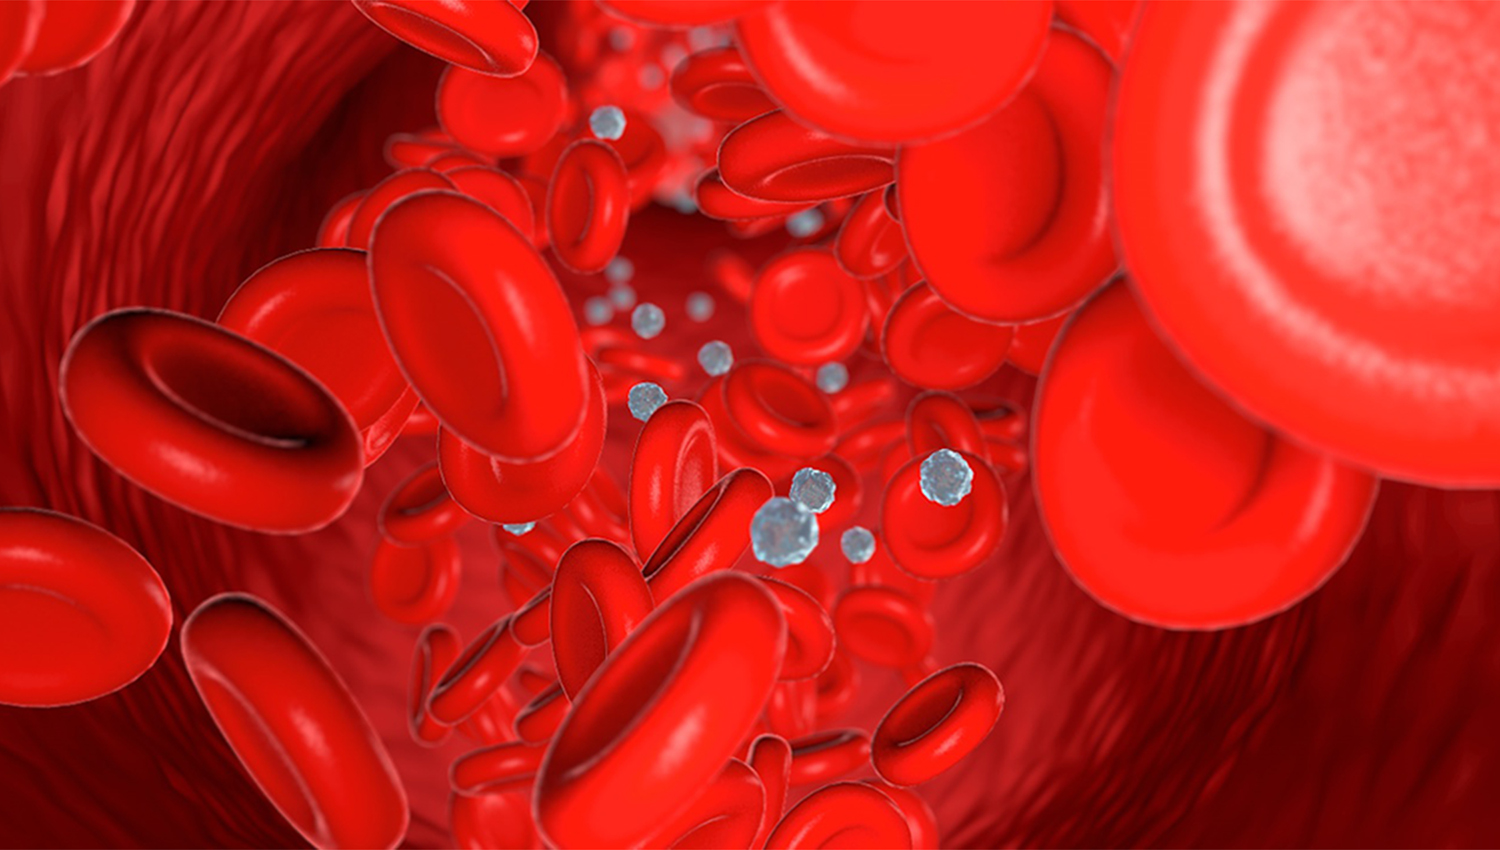 An illustration of a blood vessel